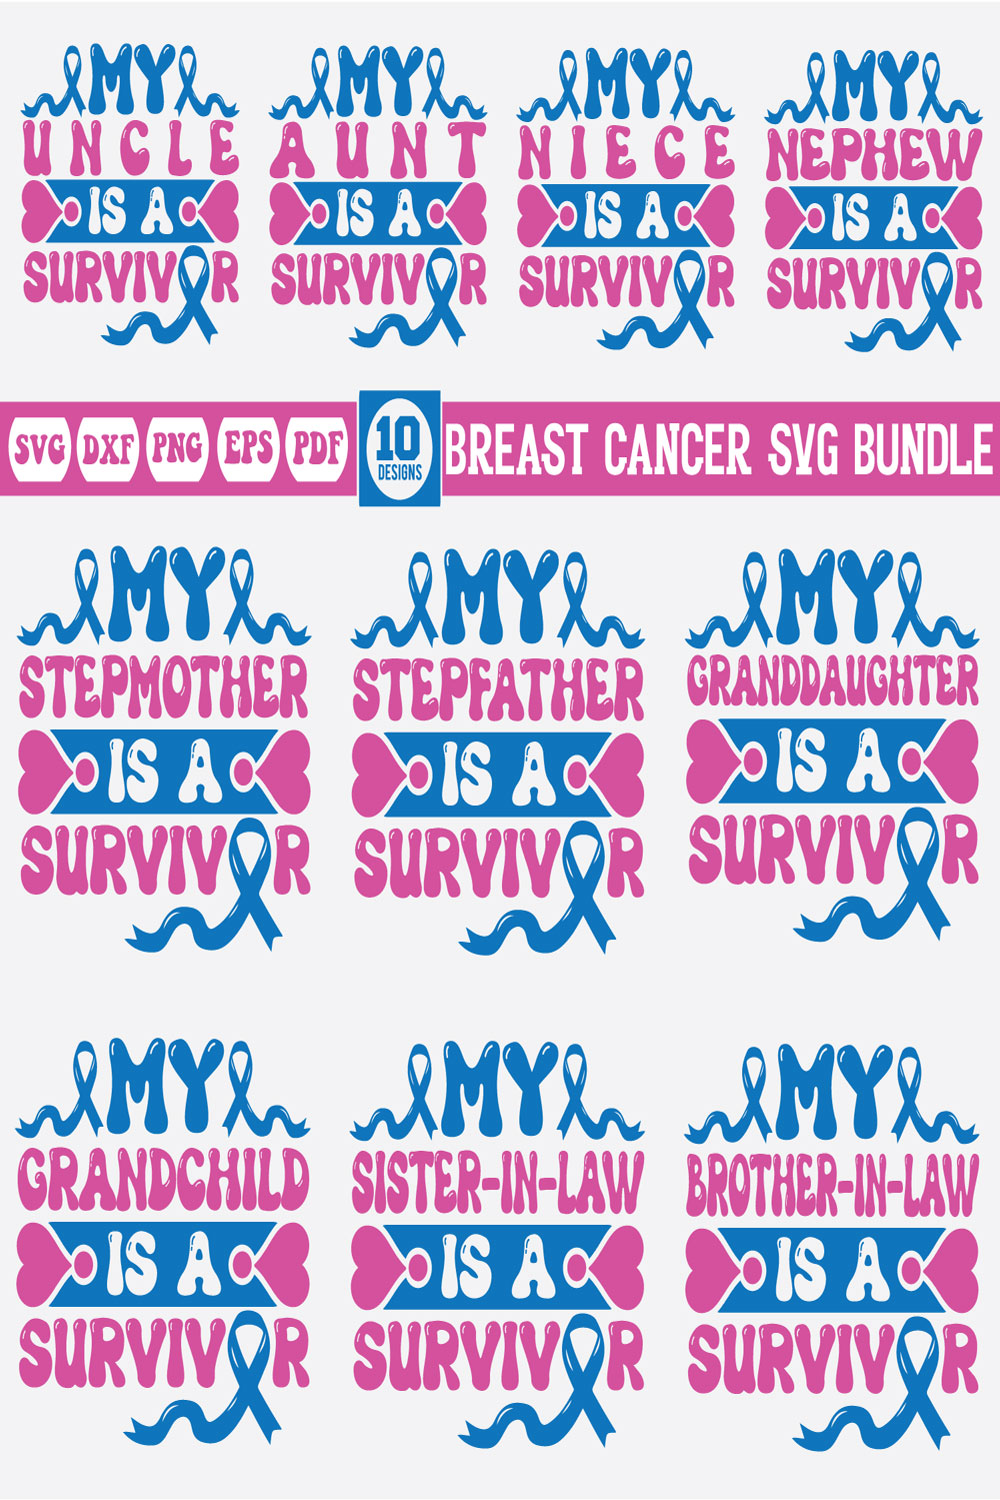 breast cancer awareness month svg bundle pinterest preview image.